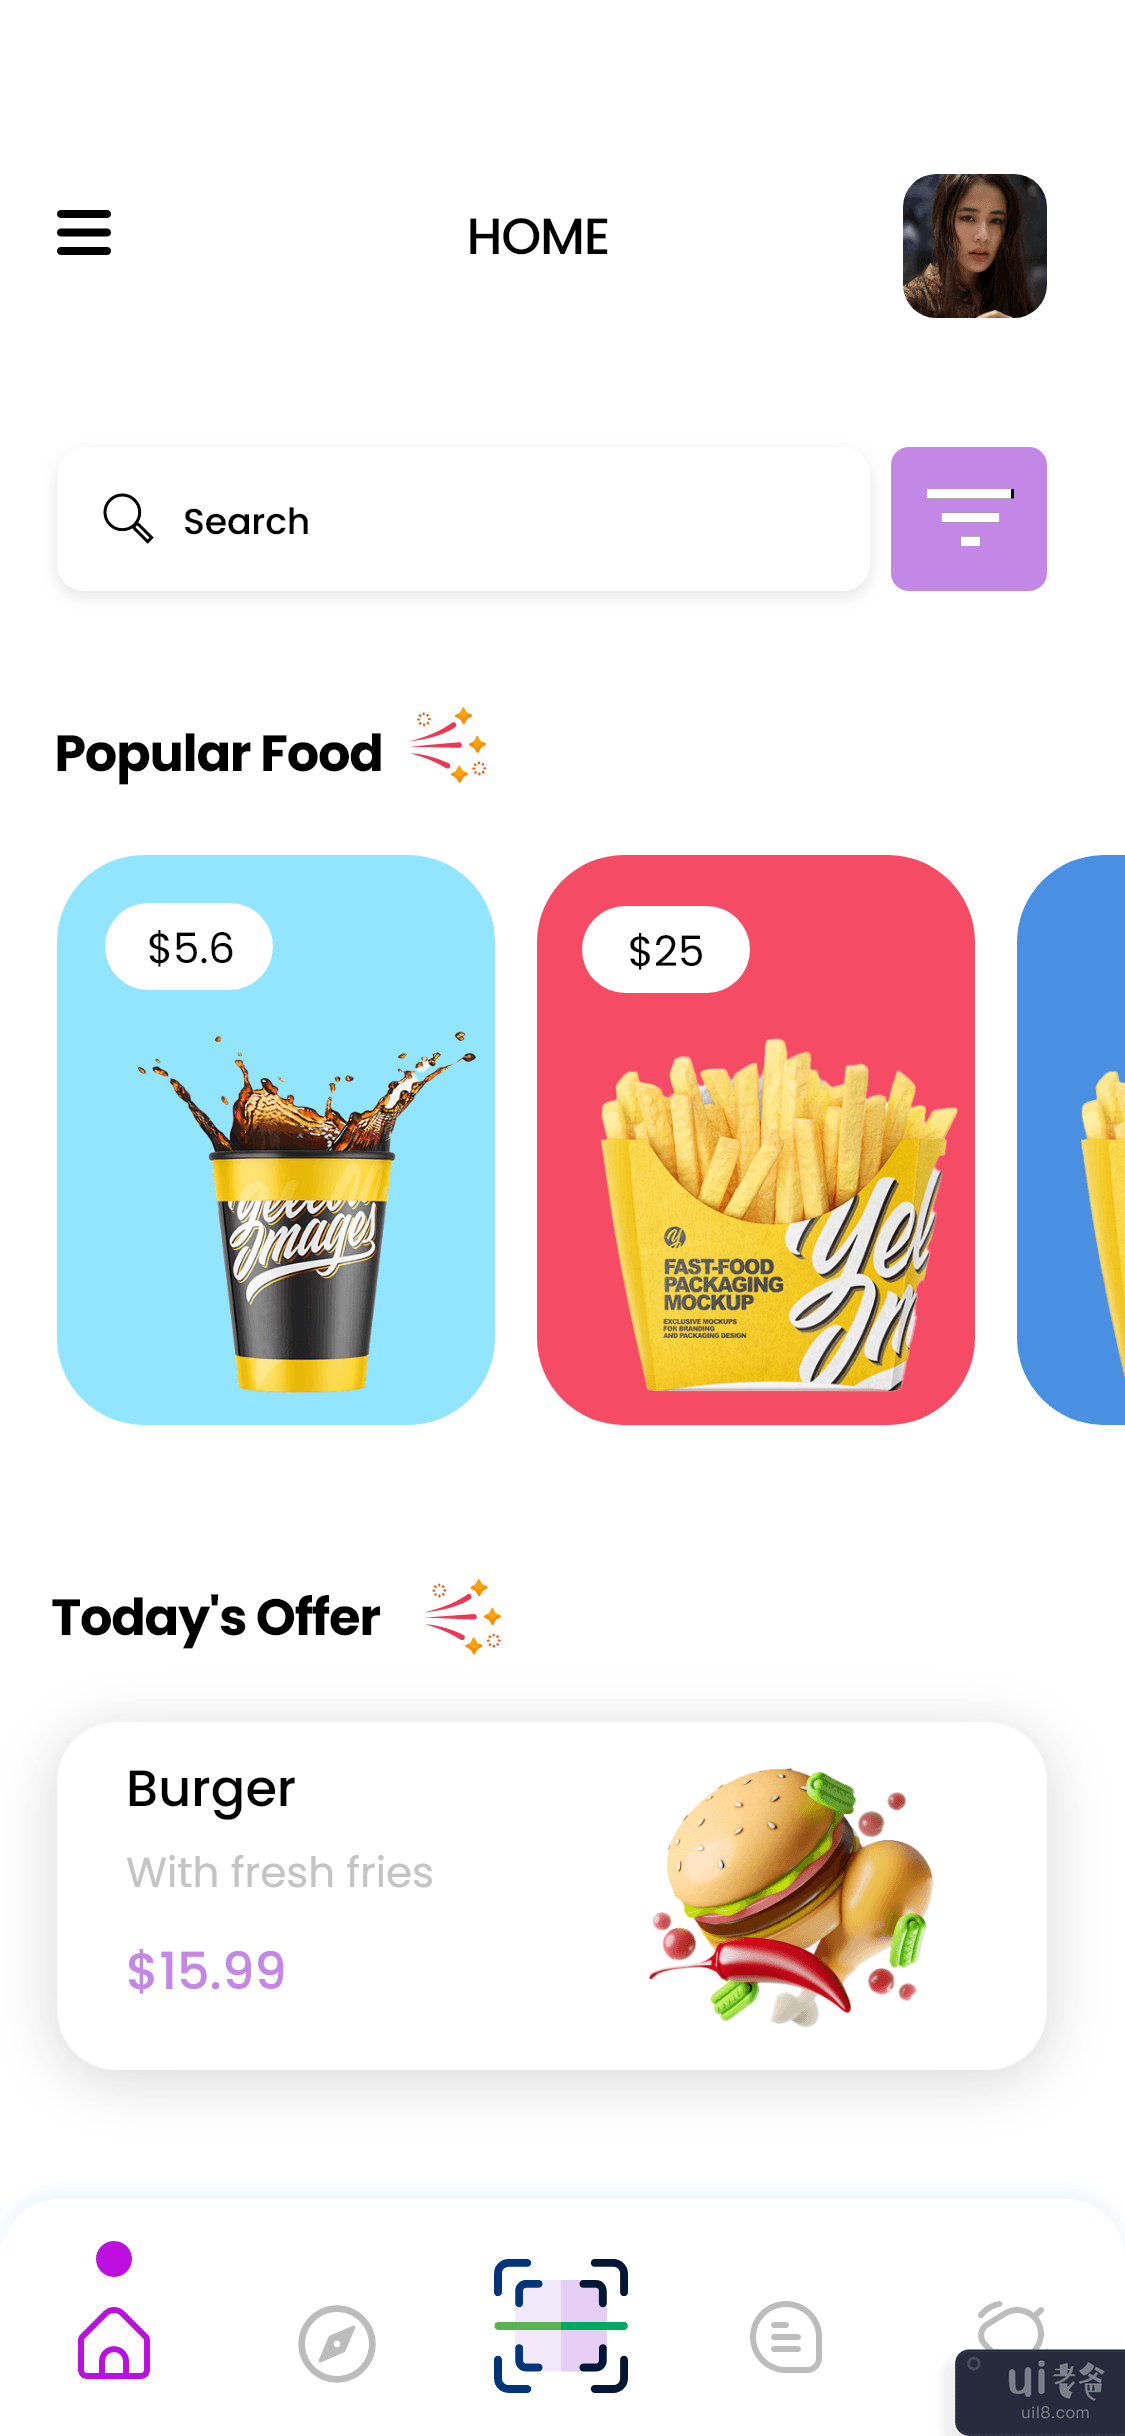 送餐应用程序 UI 套件 - 比萨店应用程序(Food Delivery app UI Kits - Pizza Shop App)插图